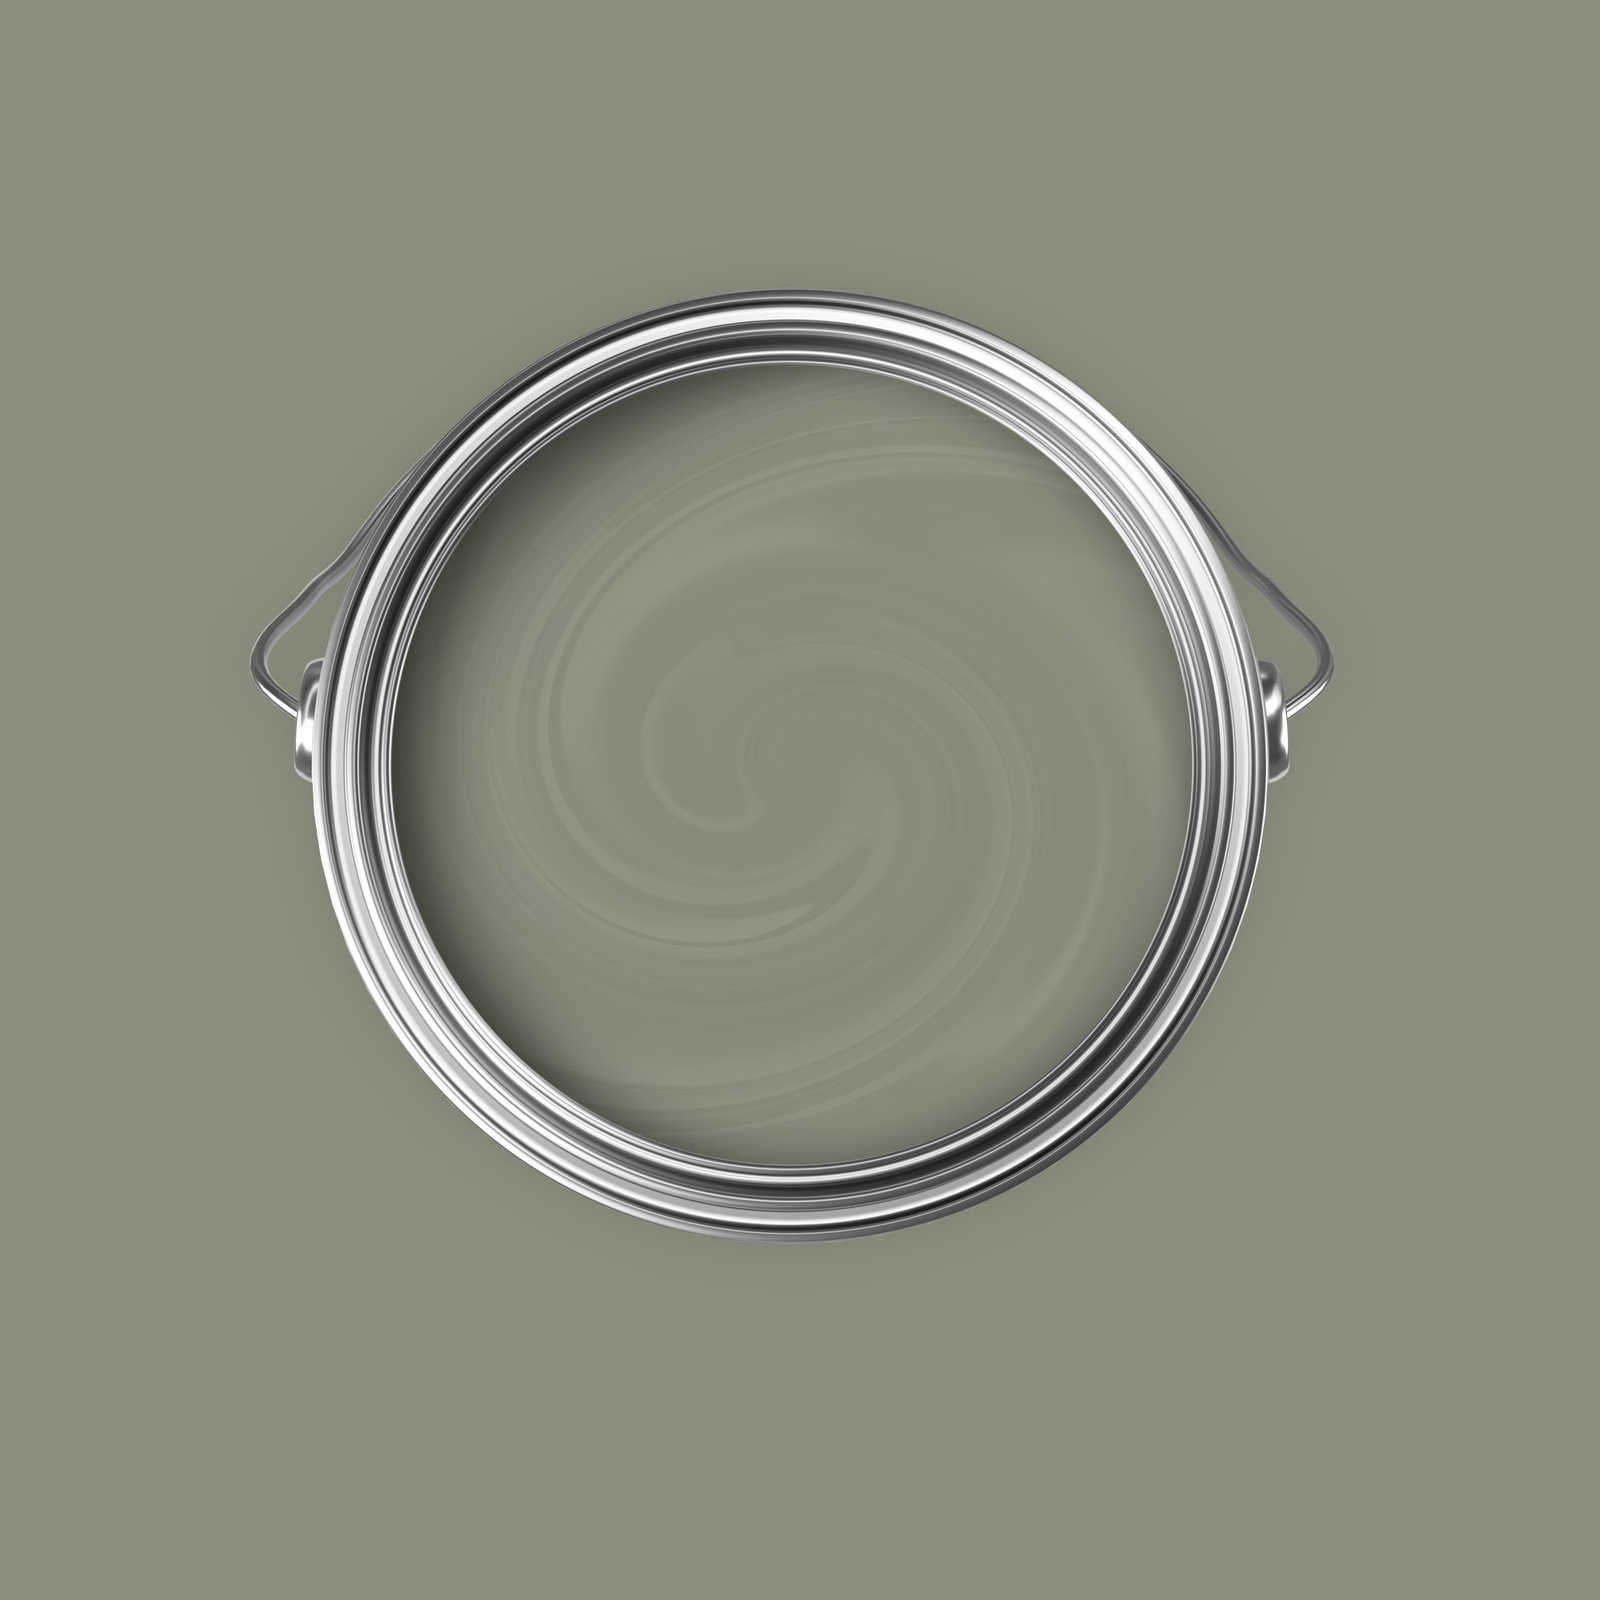             Pittura murale Premium Verde oliva convincente »Talented calm taupe« NW706 – 5 litri
        